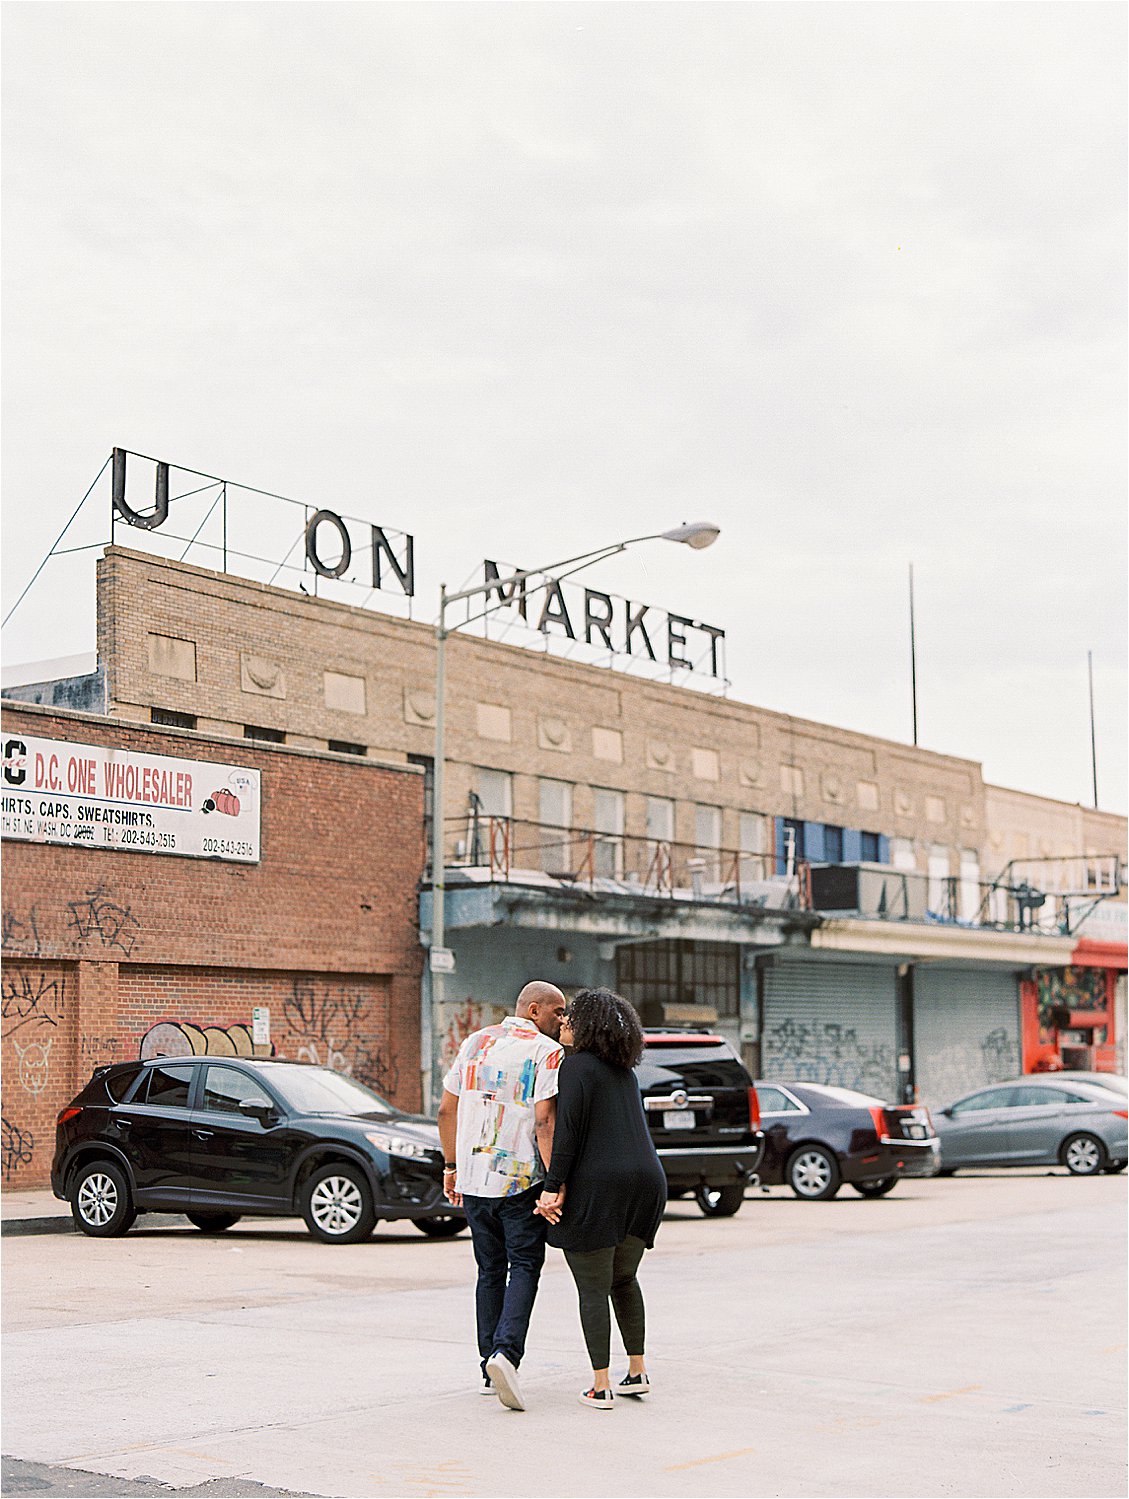 Union Market Engagement Session with DC + Destination Film Wedding Photographer, Renee Hollingshead